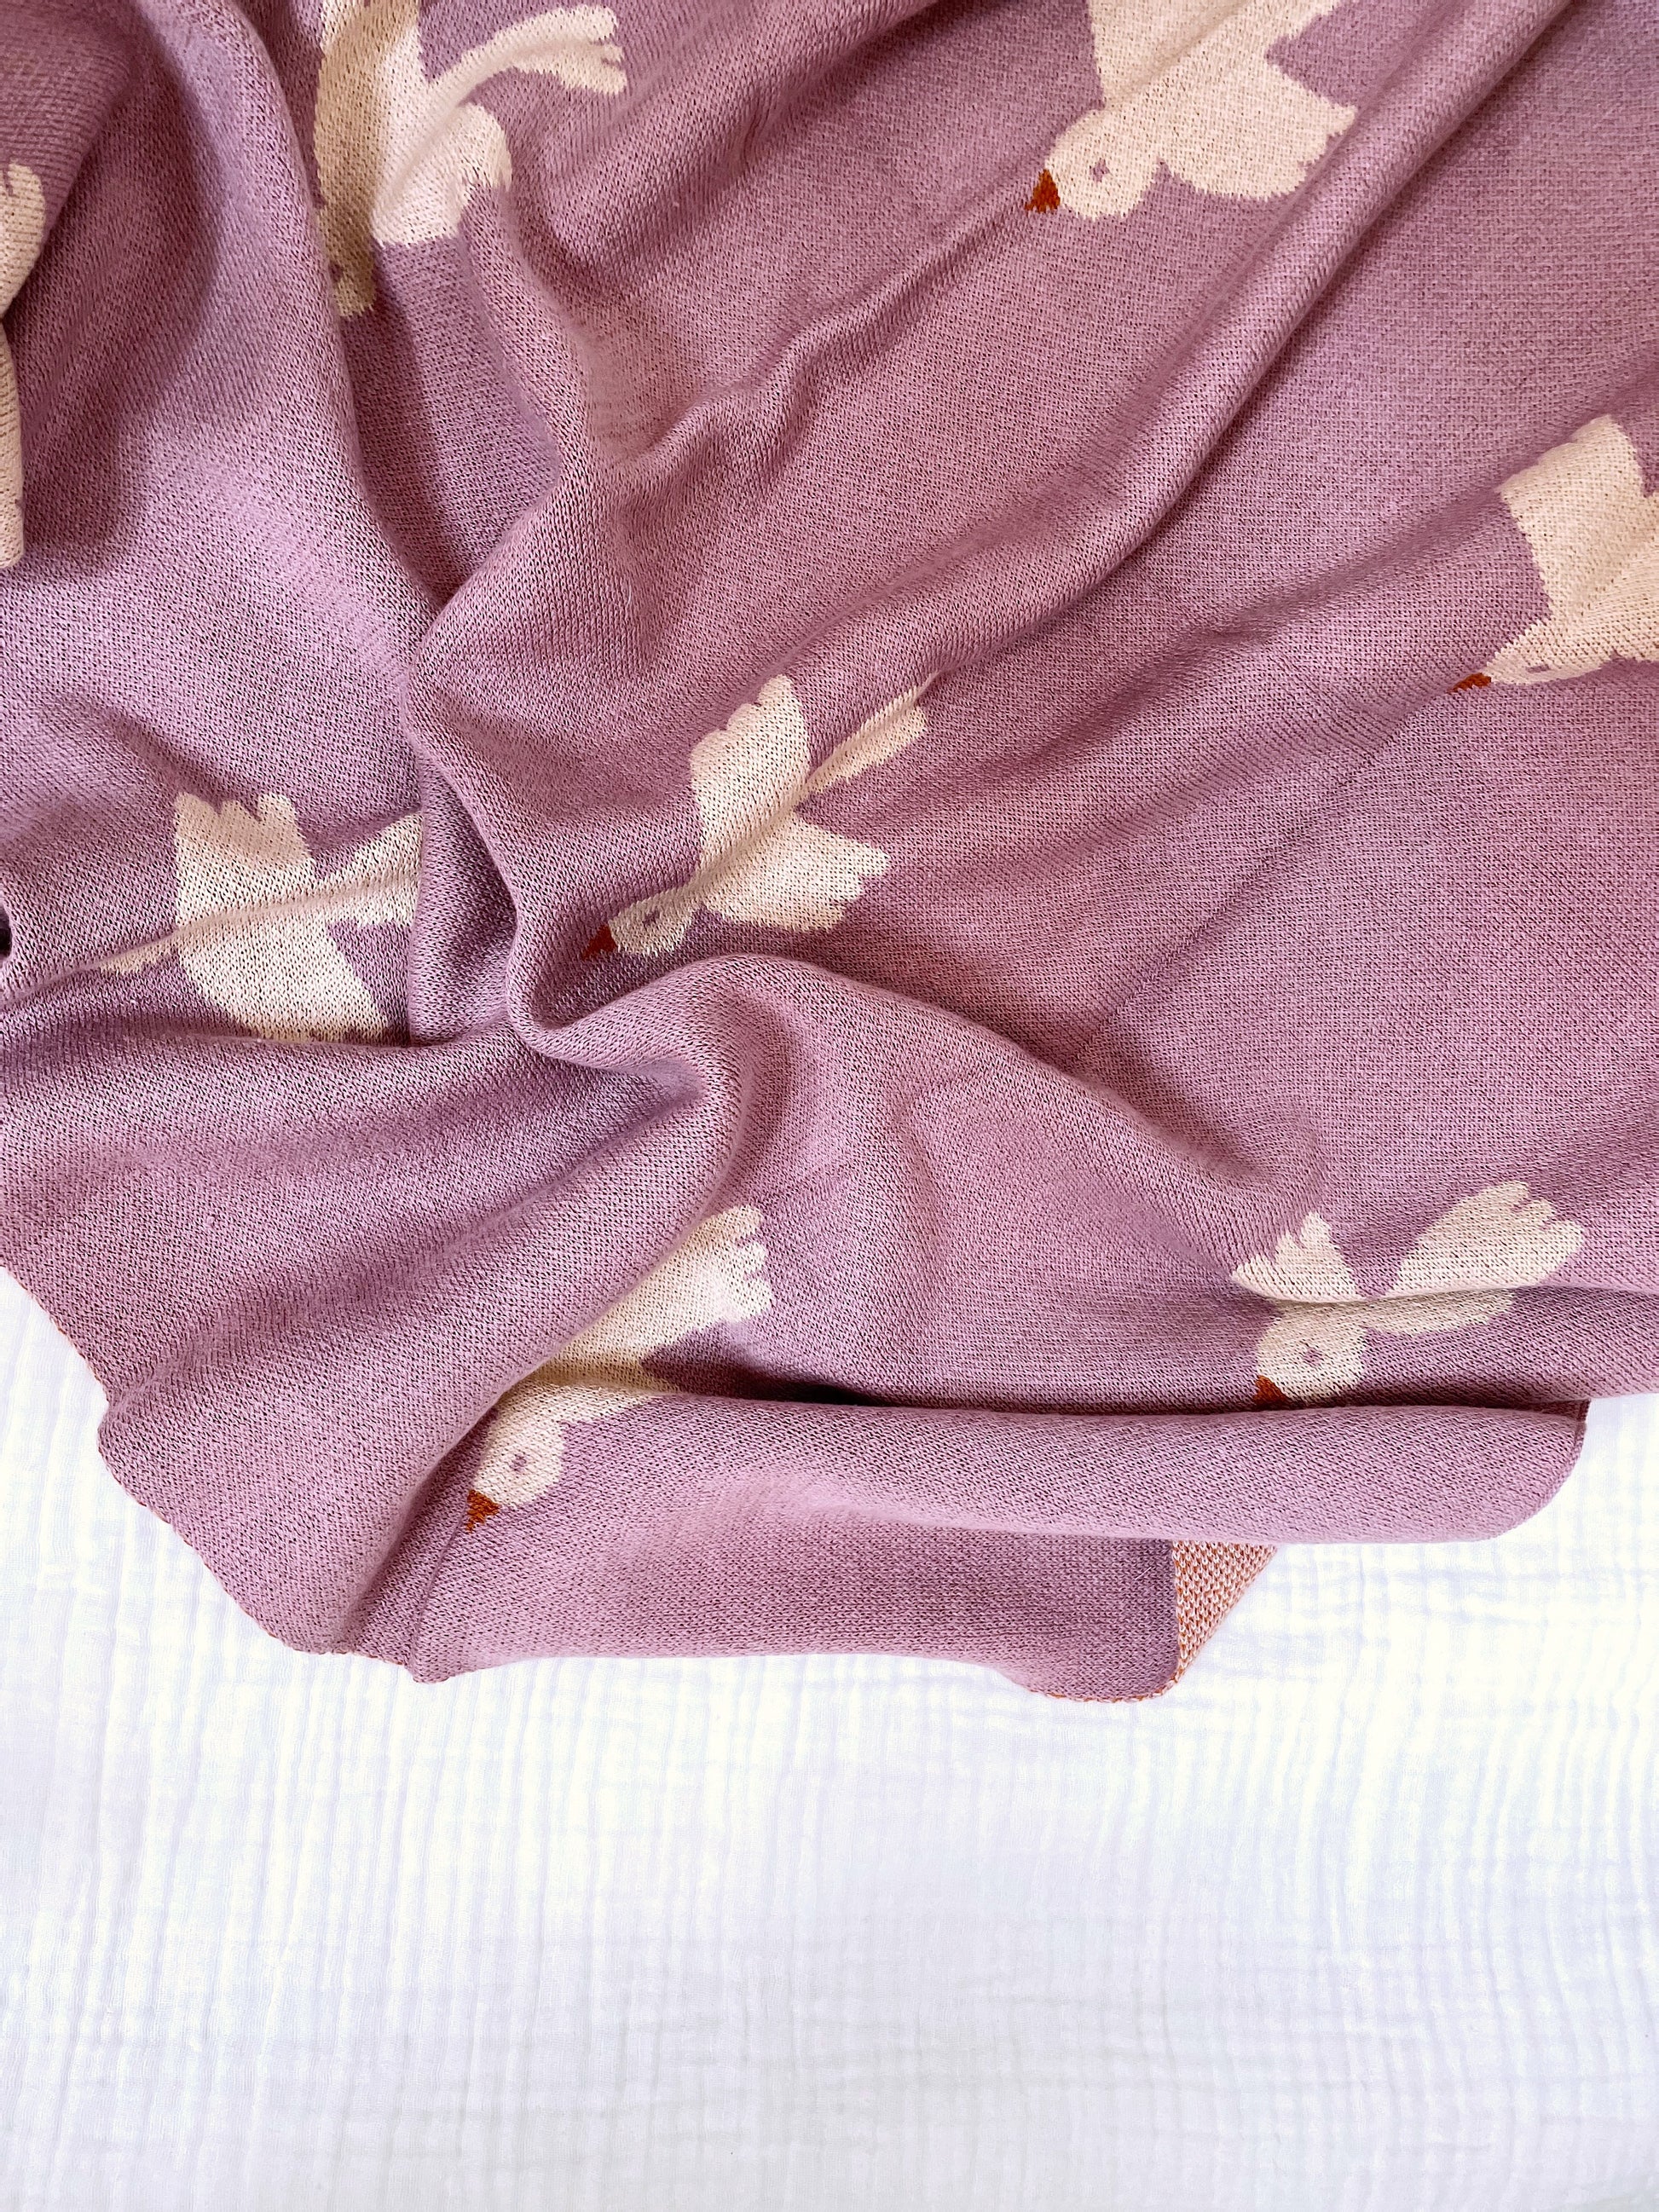 purple blanket with pale purple birds strewn on top of a pale beige blanket